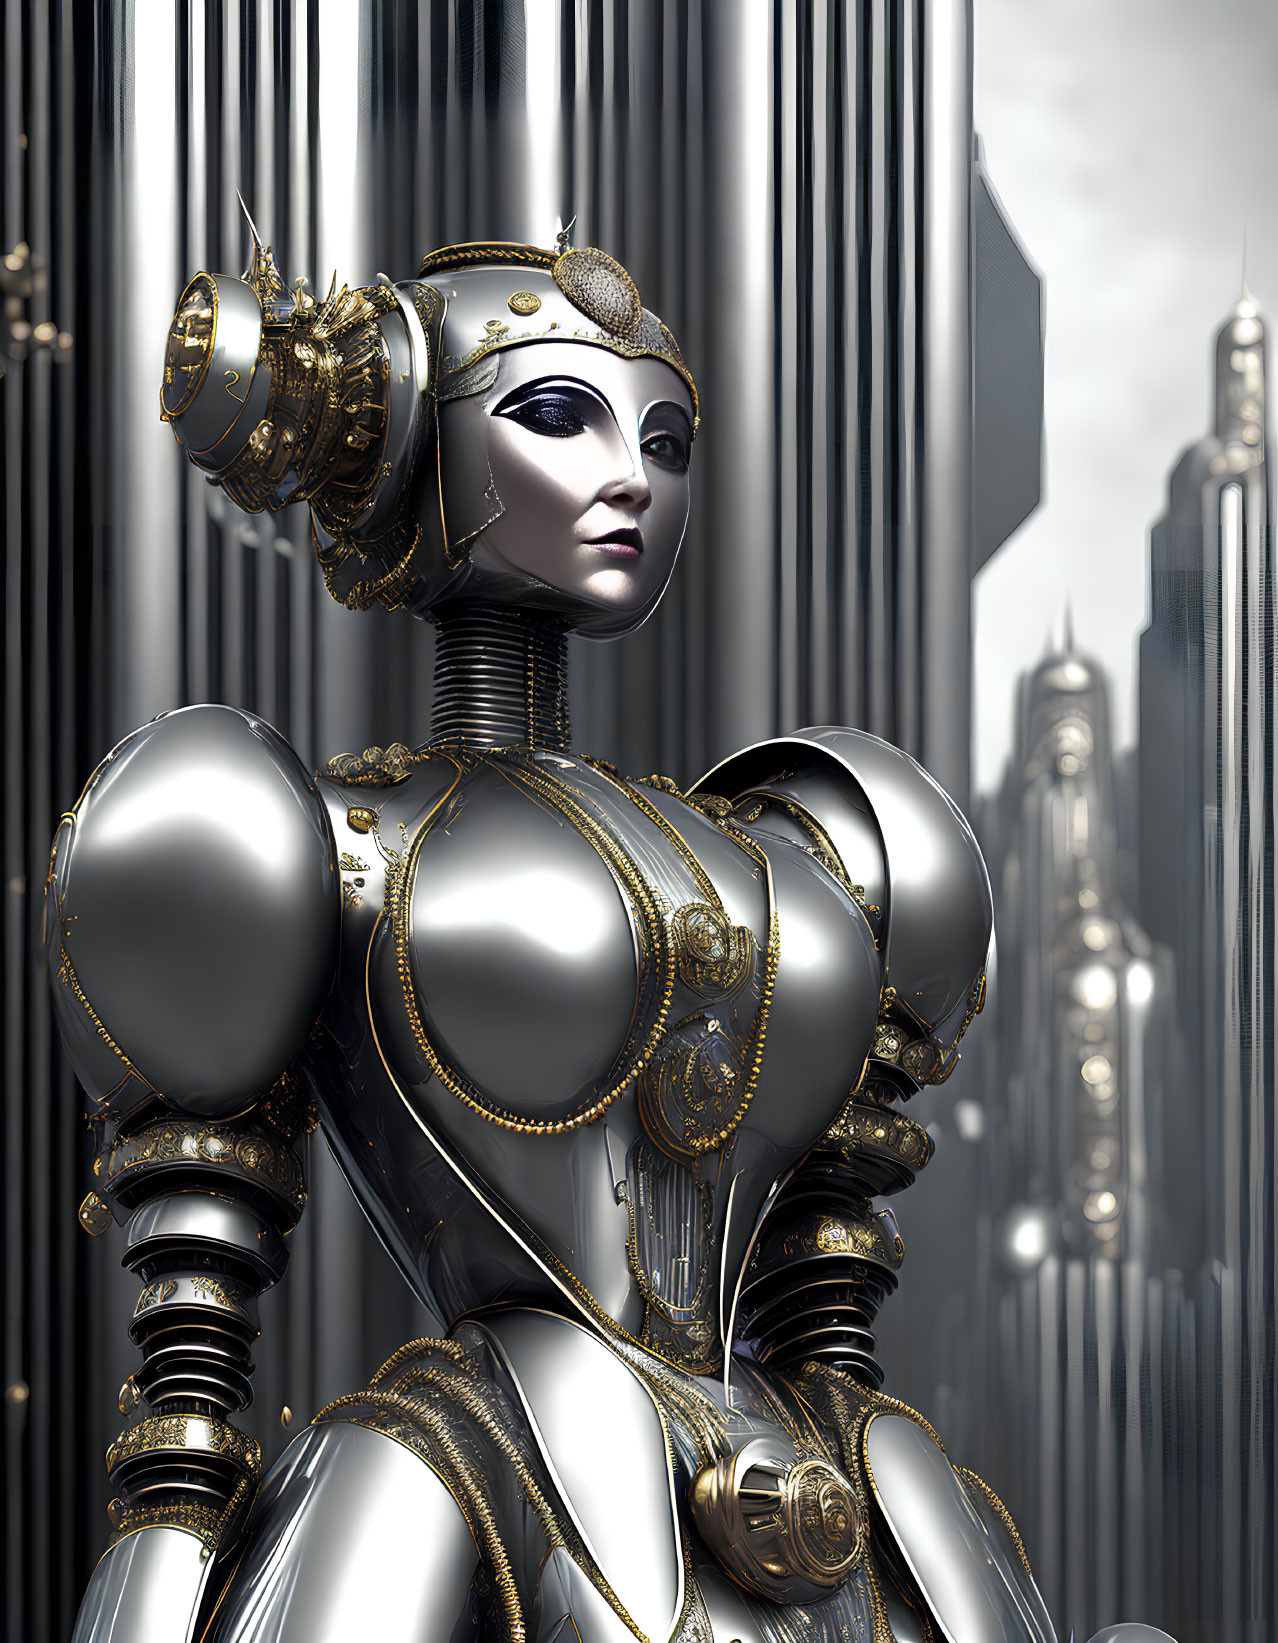 Futuristic female robot in ornate gold and silver design amid sleek cityscape